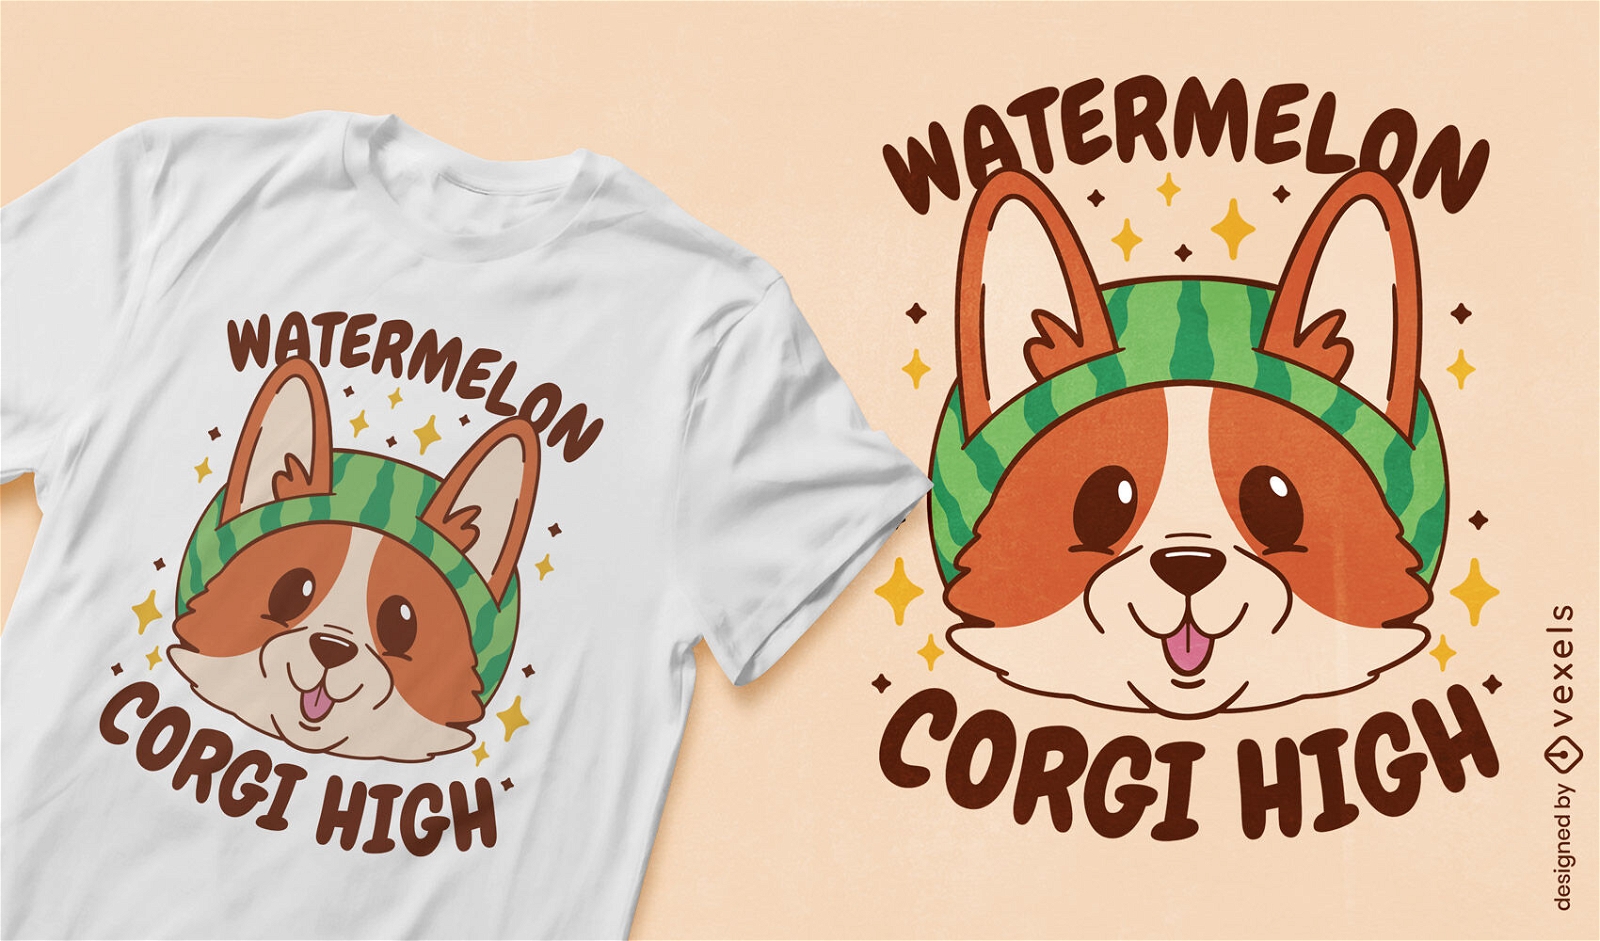 Watermelon corgi high t-shirt design